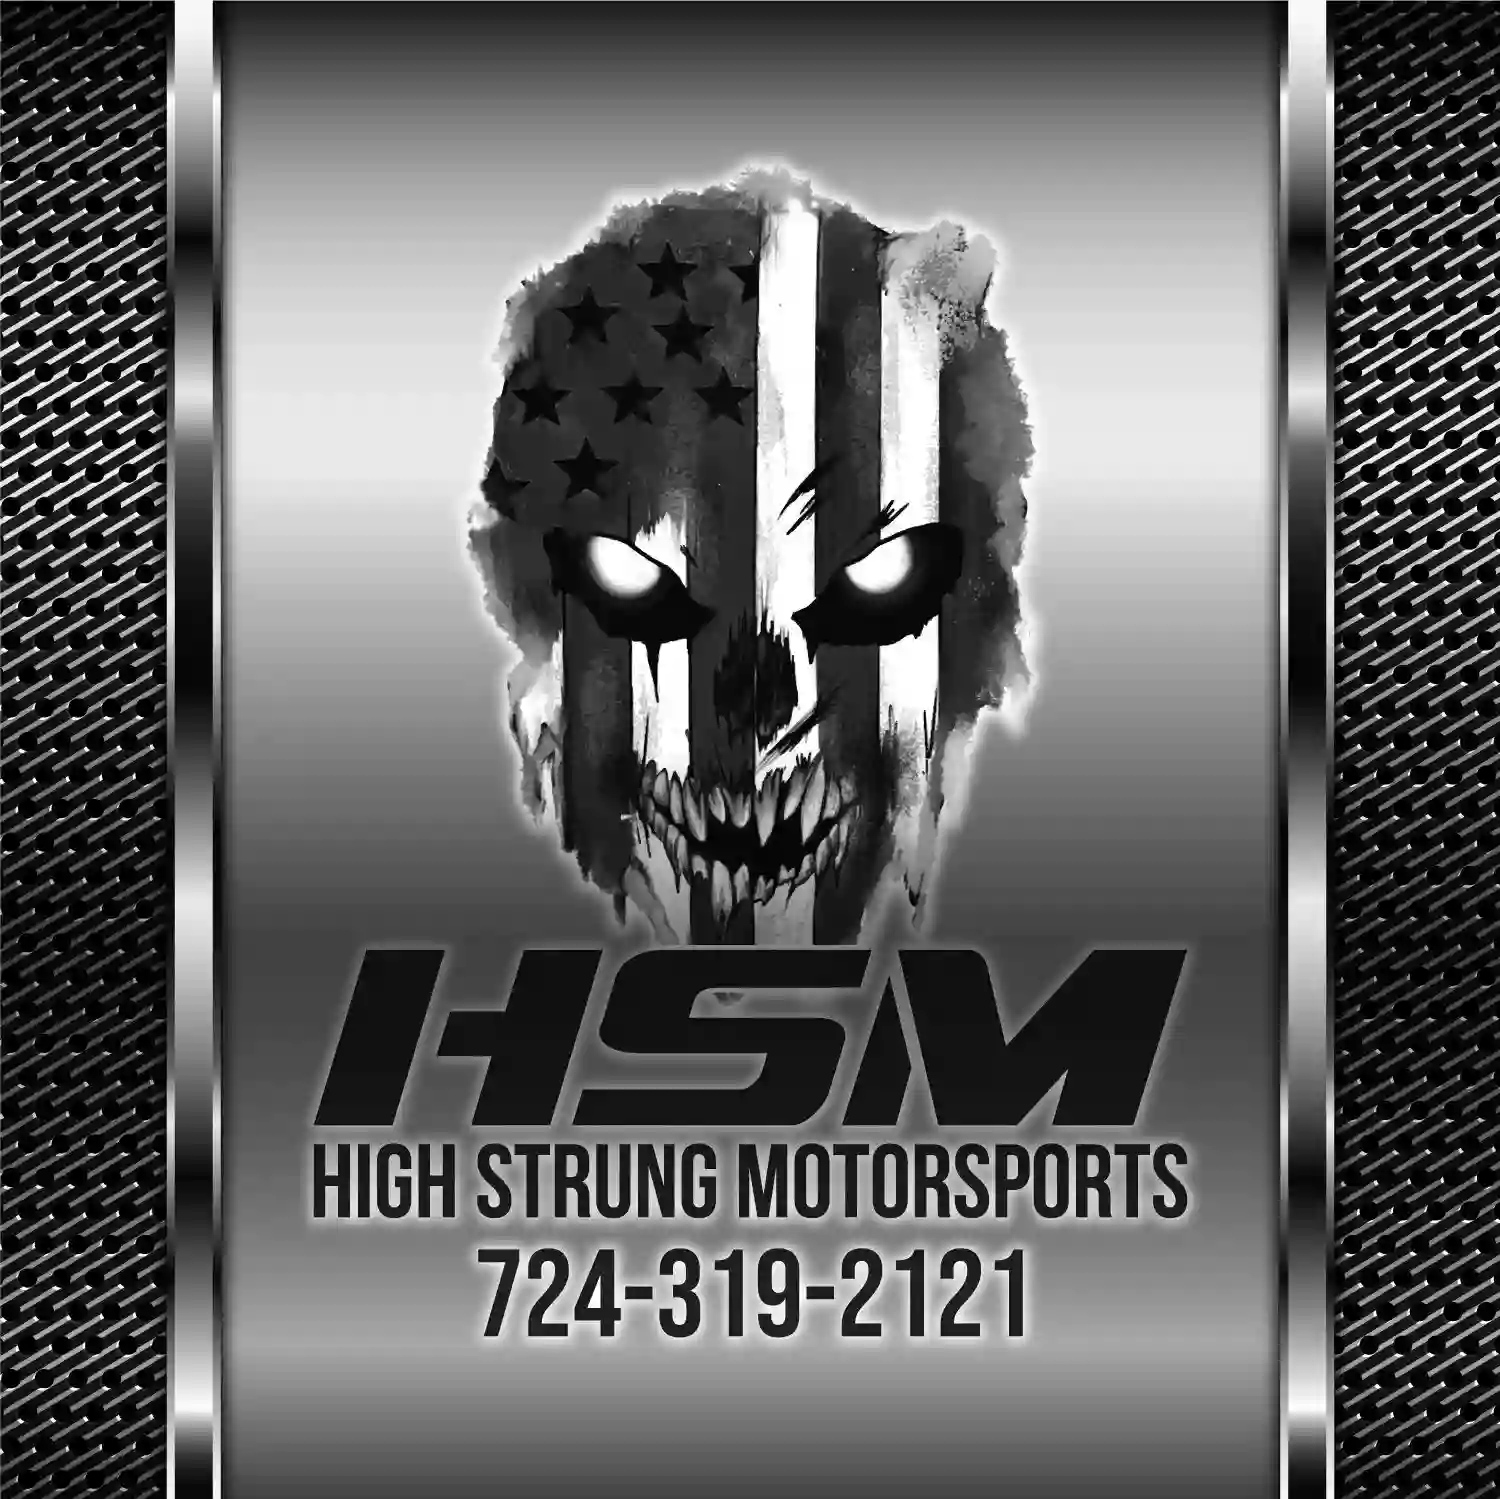 High Strung Motorsports